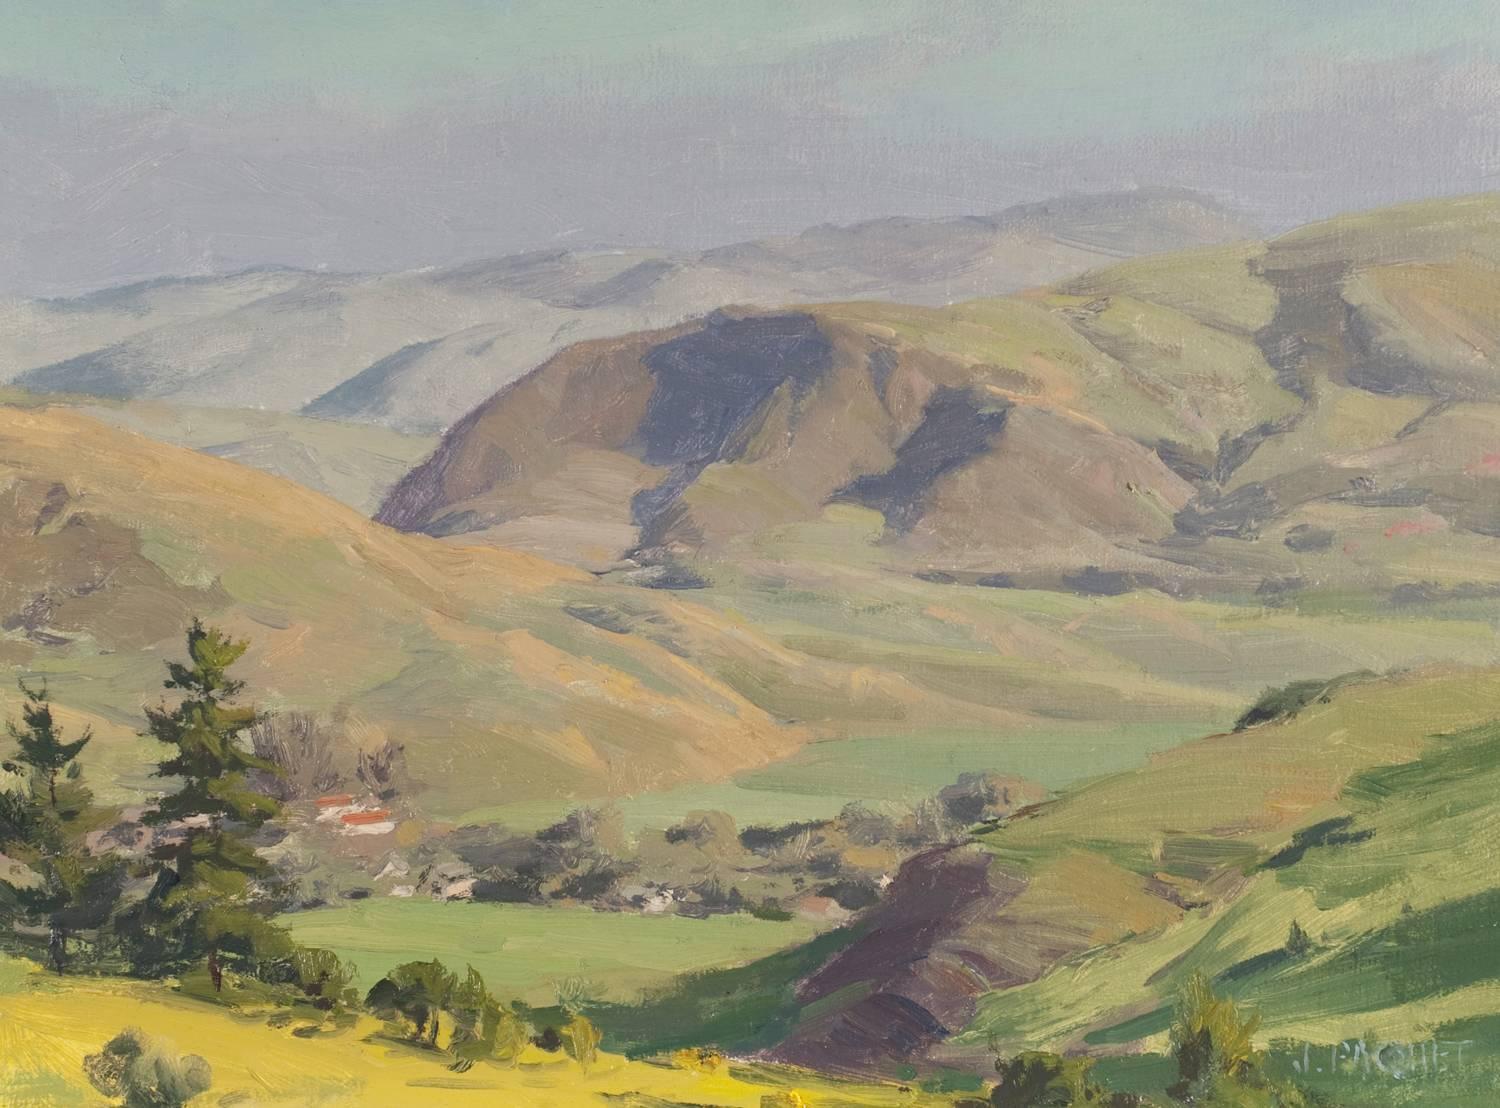 Pinecones for Joseph; Velvet Hills, Cambria - Painting by Joseph Paquet